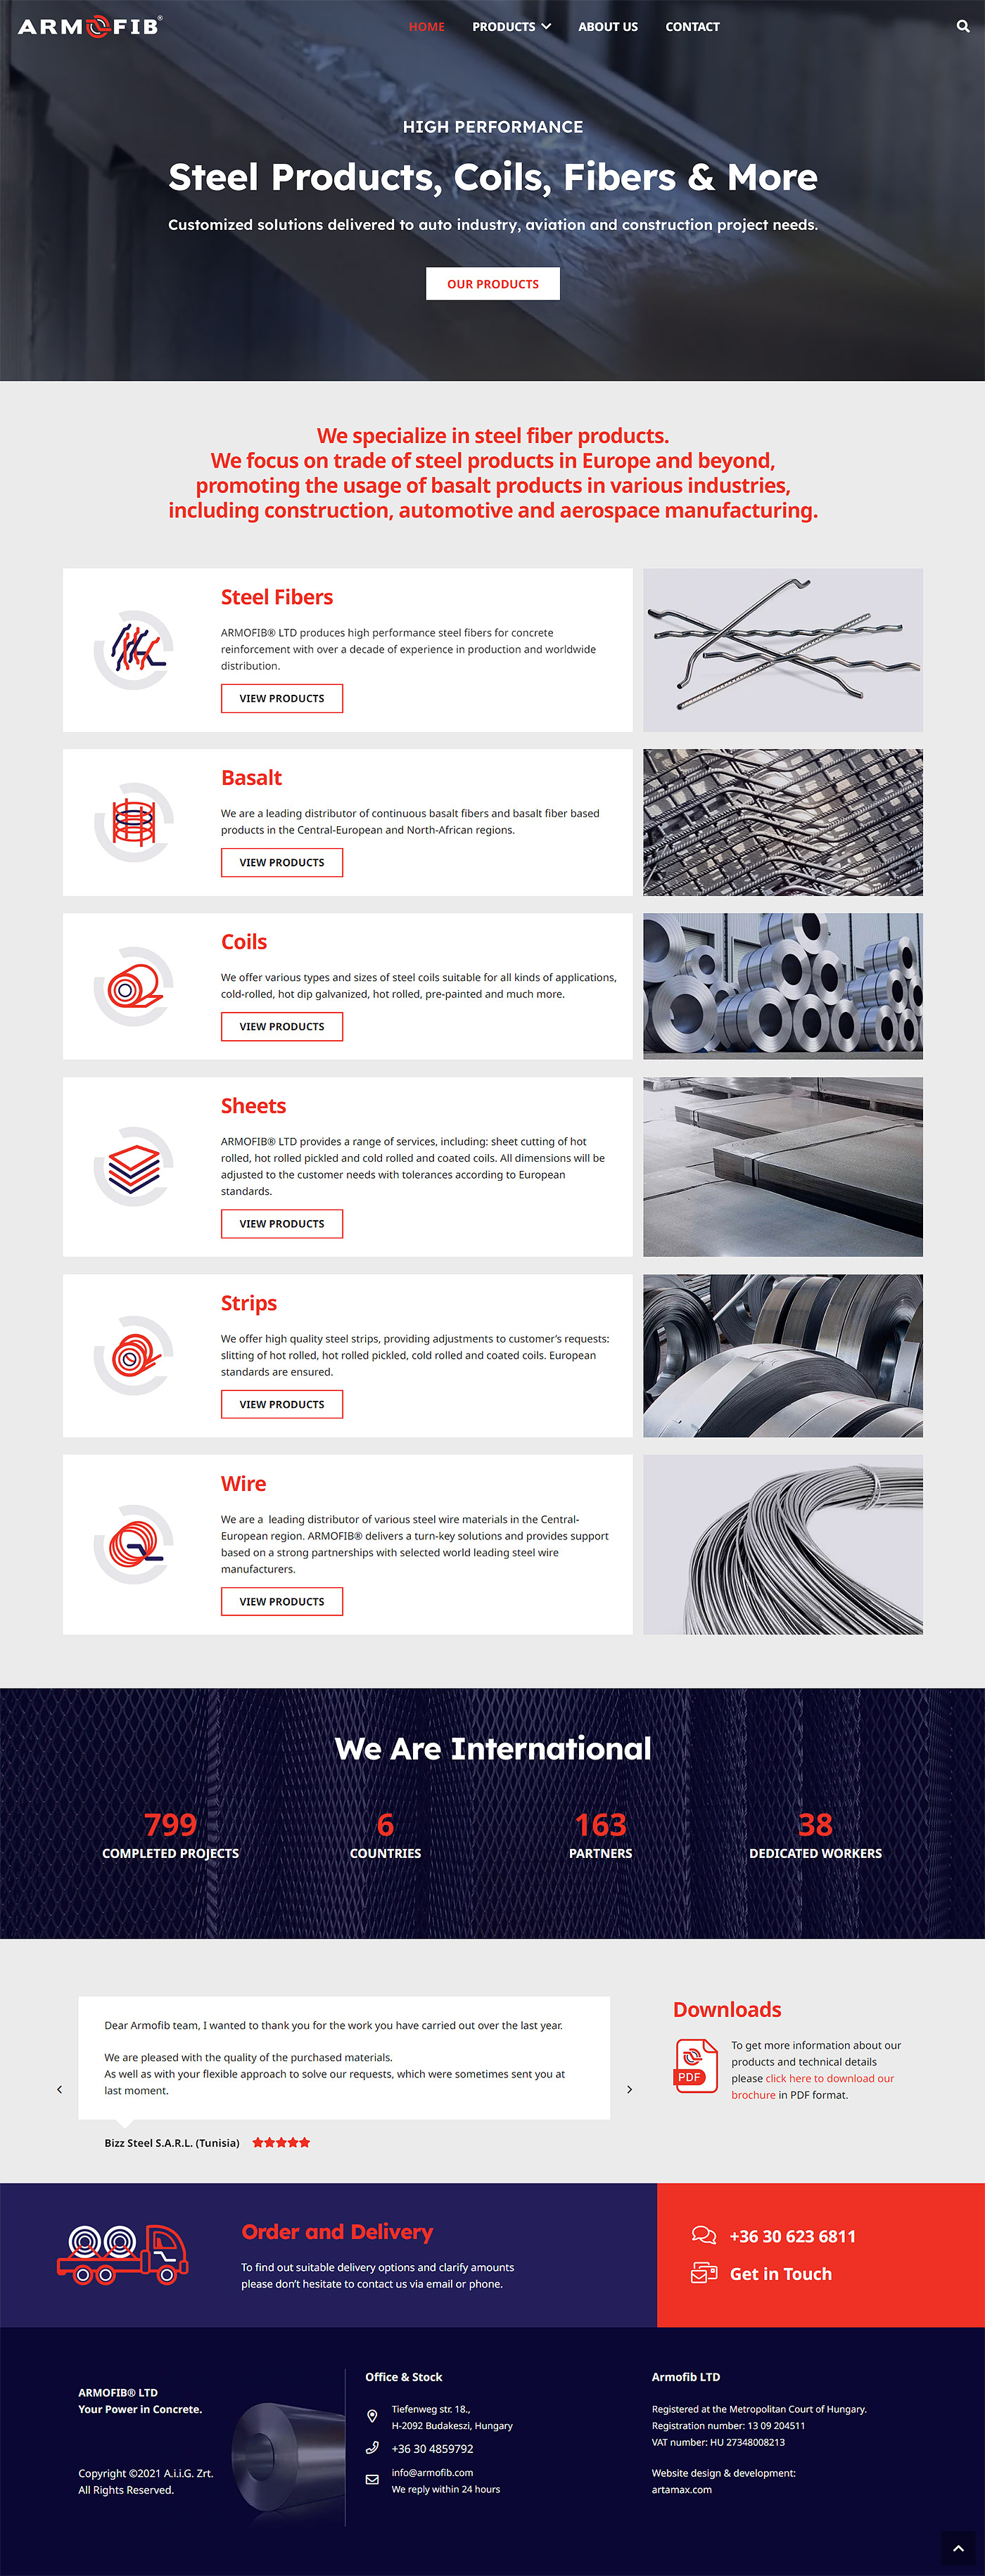 Armofib Company Website Design